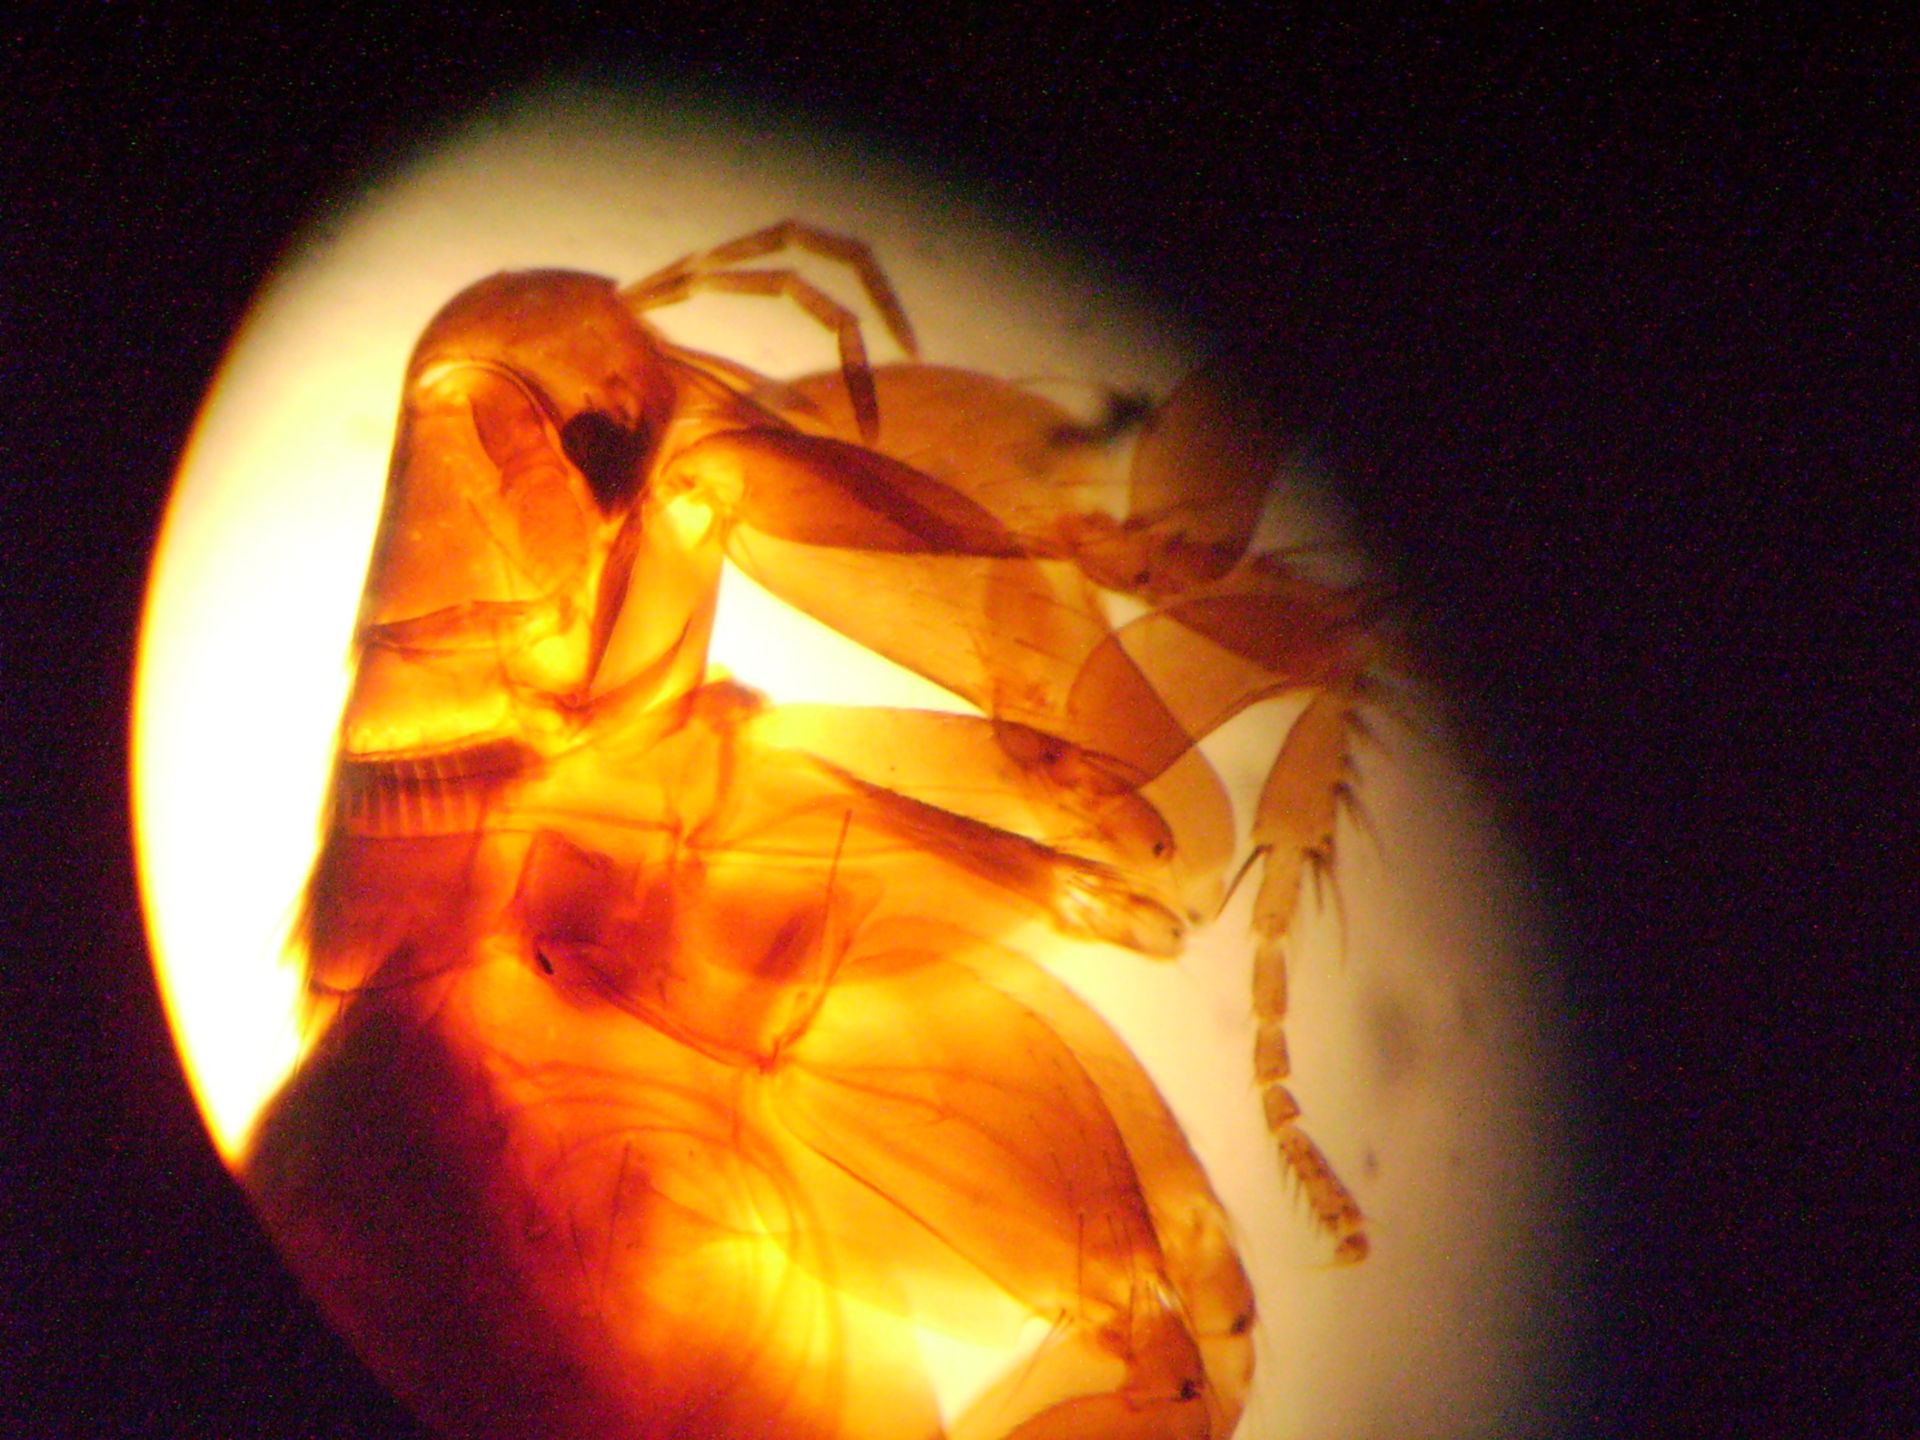 Plague flea 2